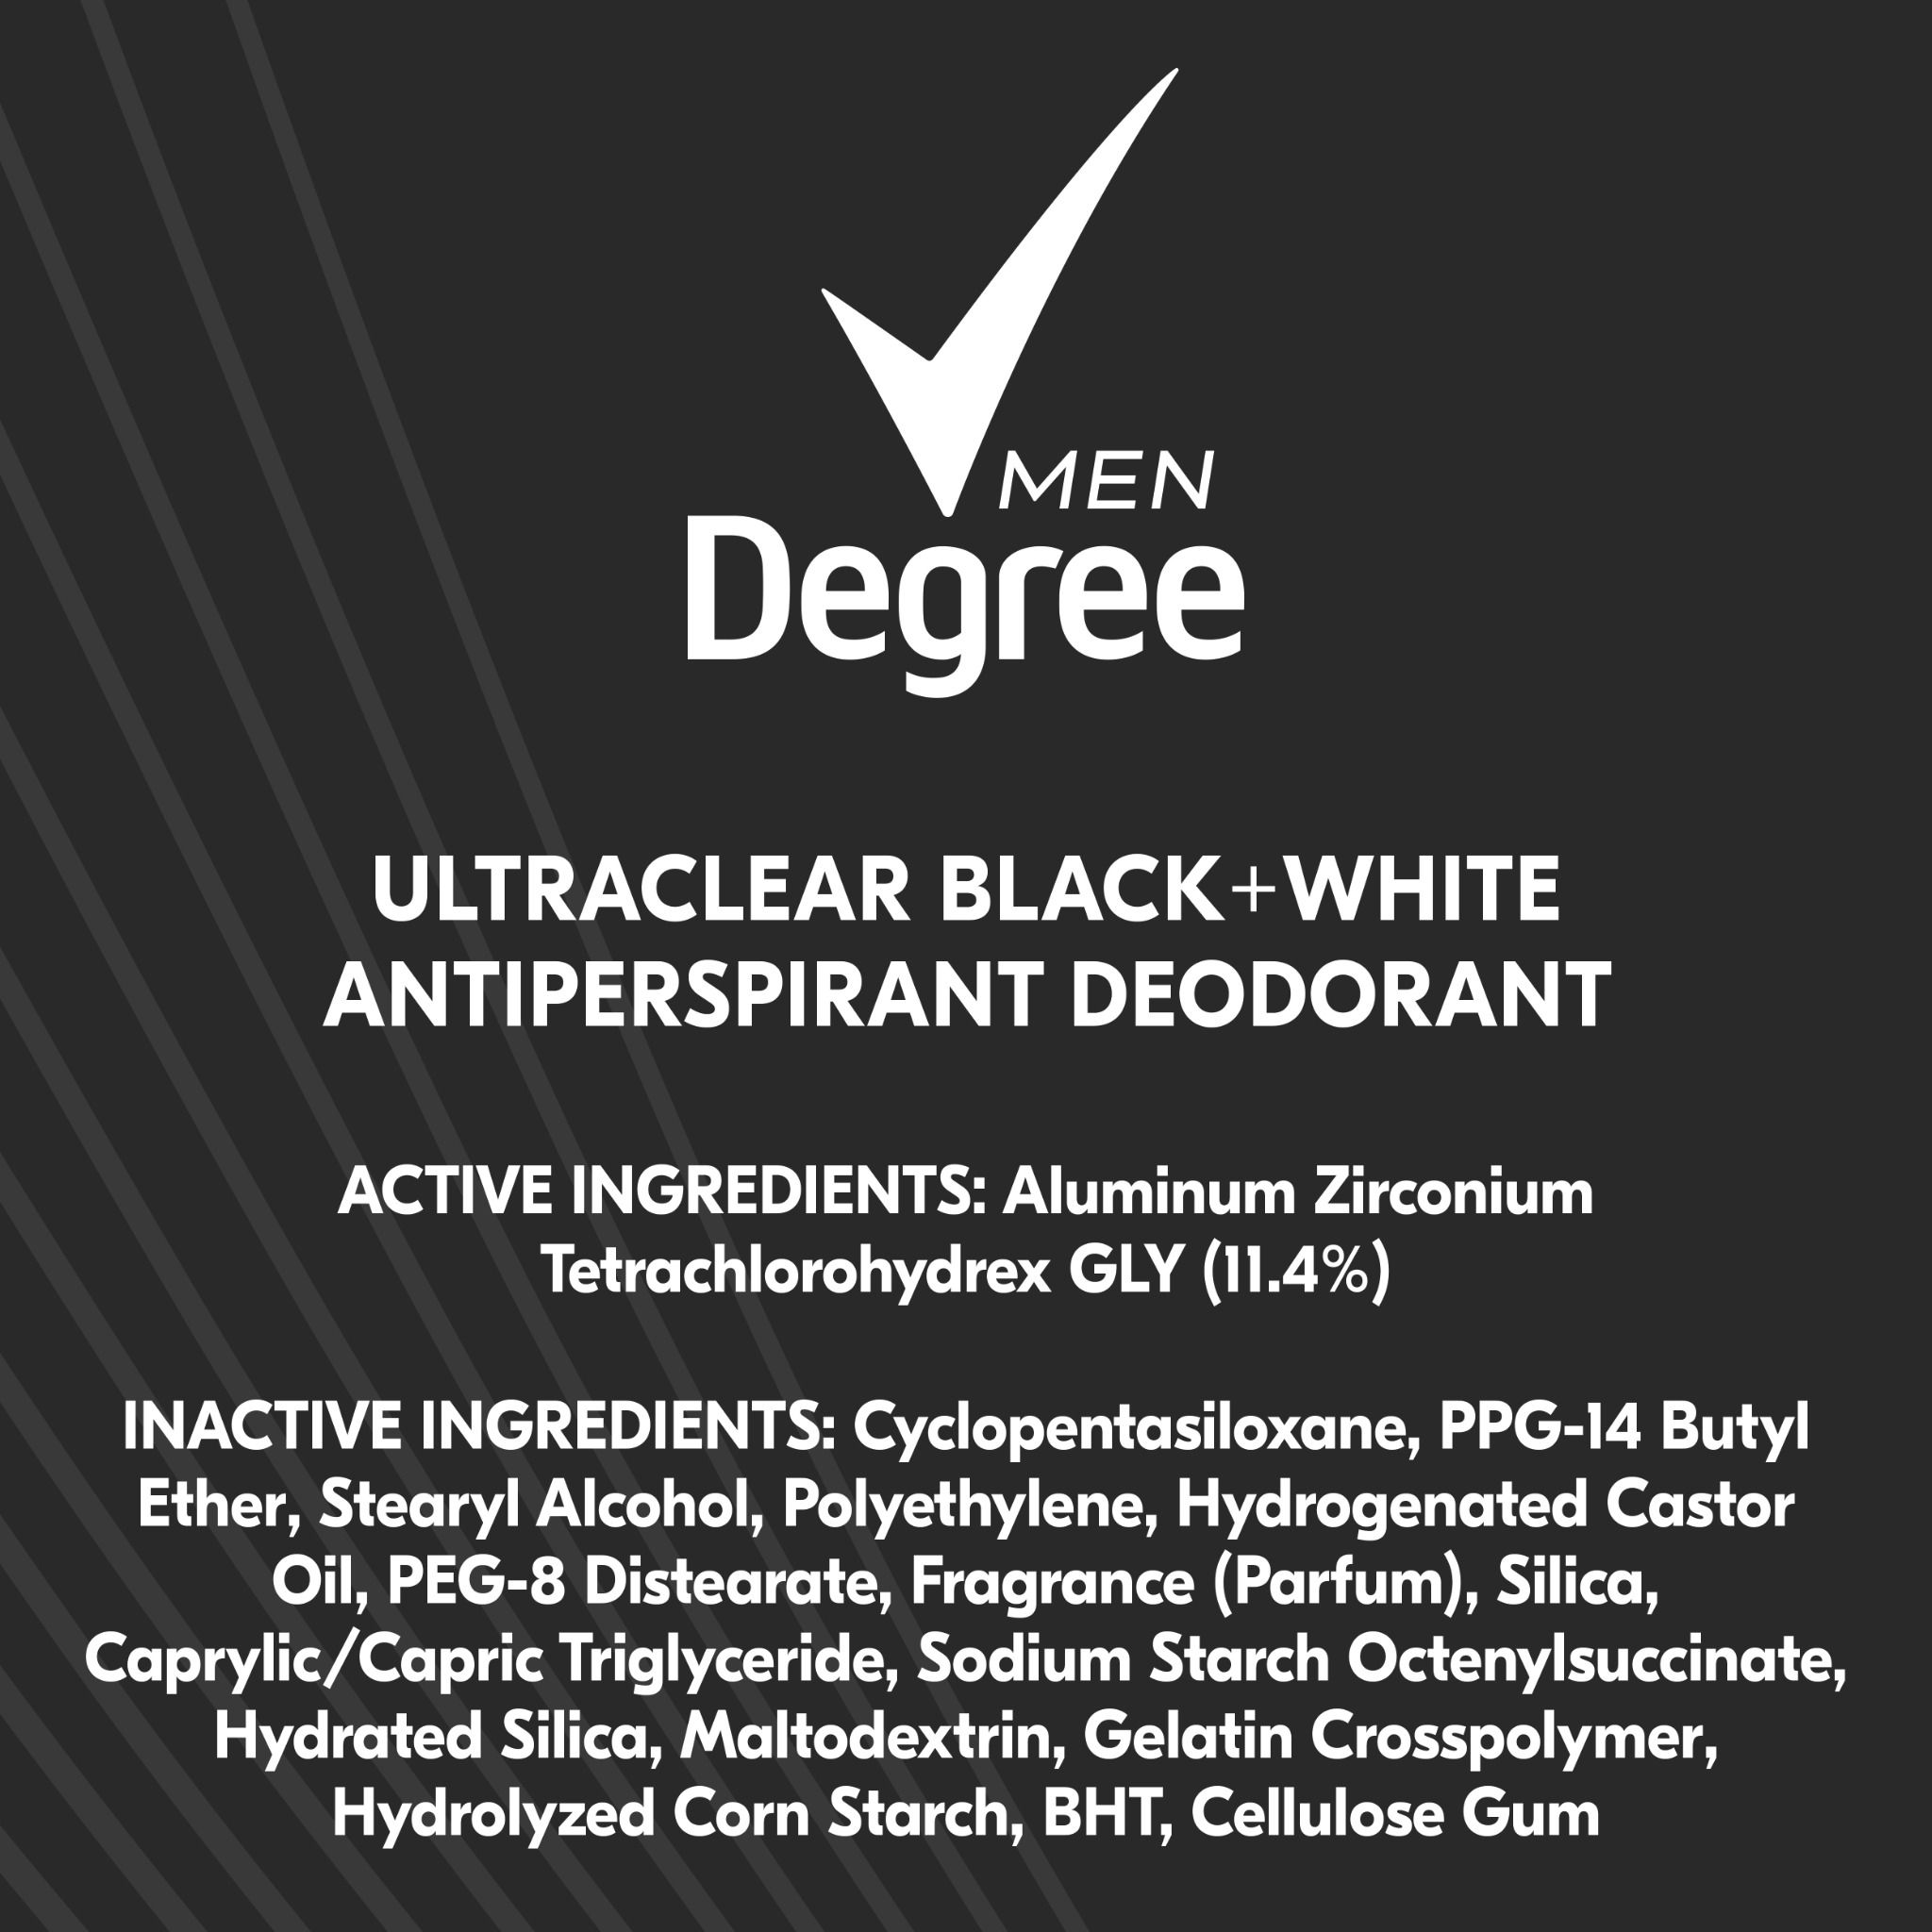  Lăn Khử Mùi Nam Dạng Sáp Degree Men UltraClear Antiperspirant Deodorant Stick Black+White 2.7 Oz [Chai 76g] 